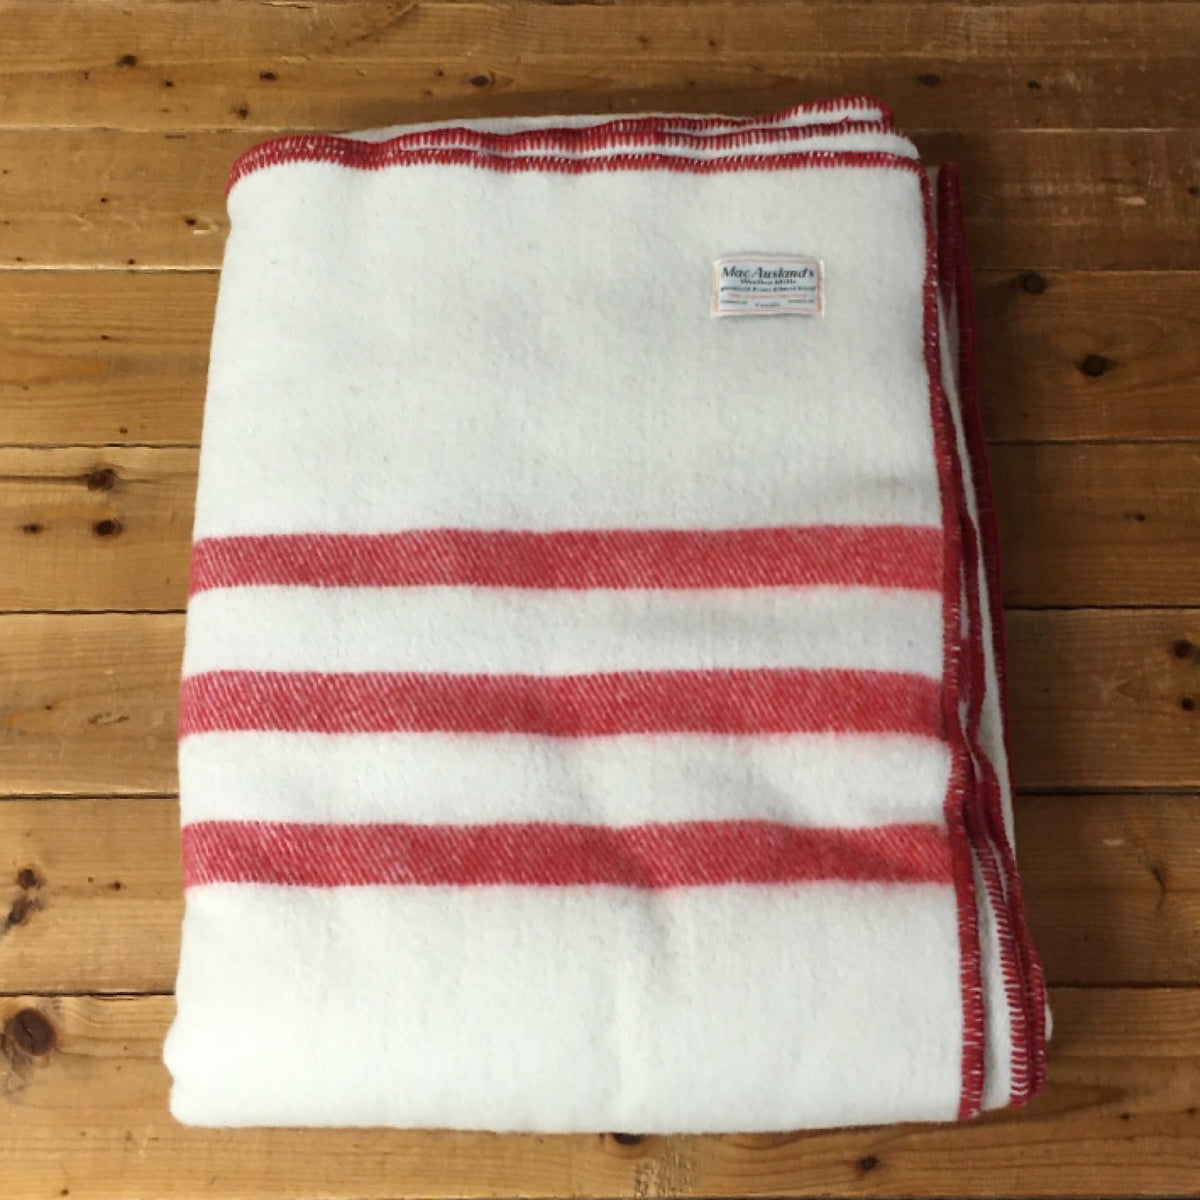 MacAusland White Lap Blanket, Red Stripes